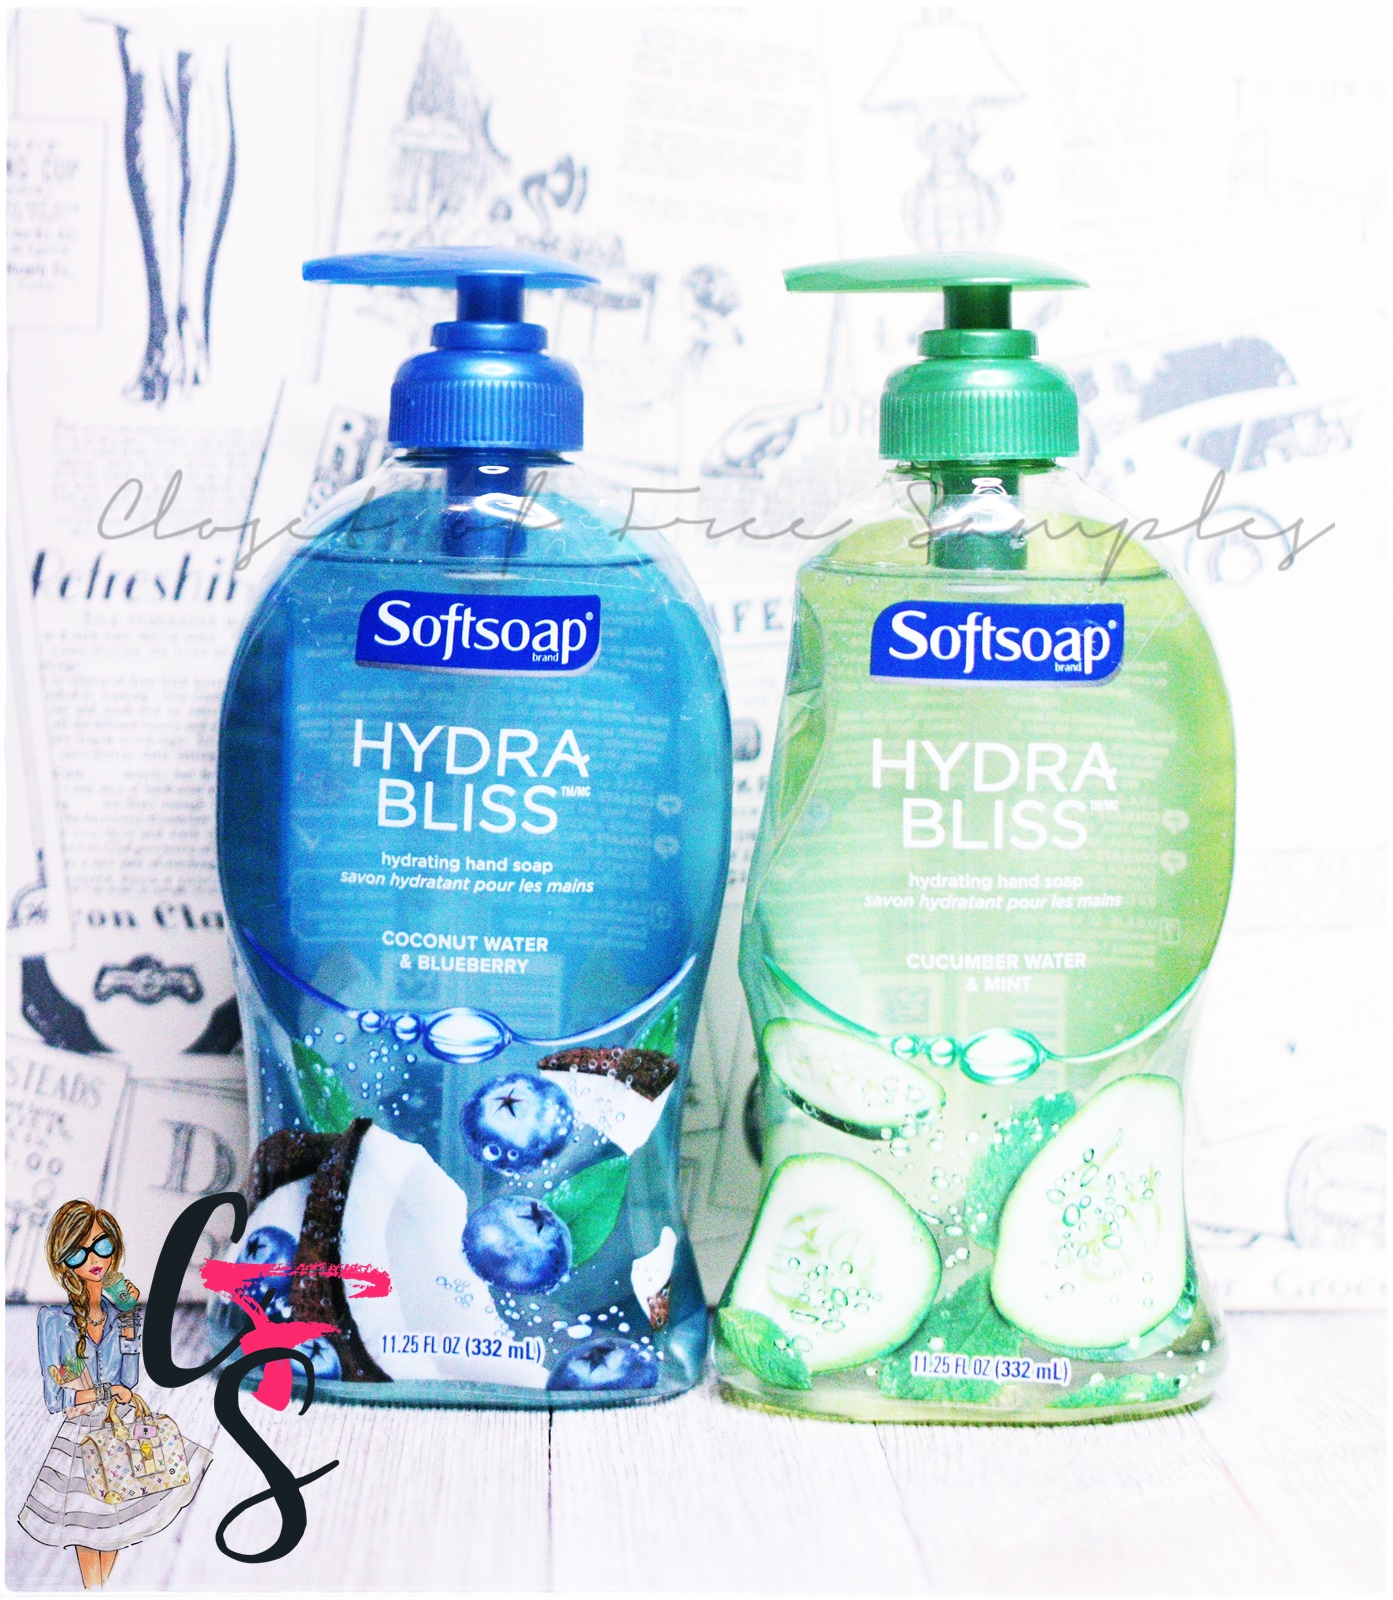 SoftSoap Hydra Bliss Hand Soap Review_ClosetSamples.JPG